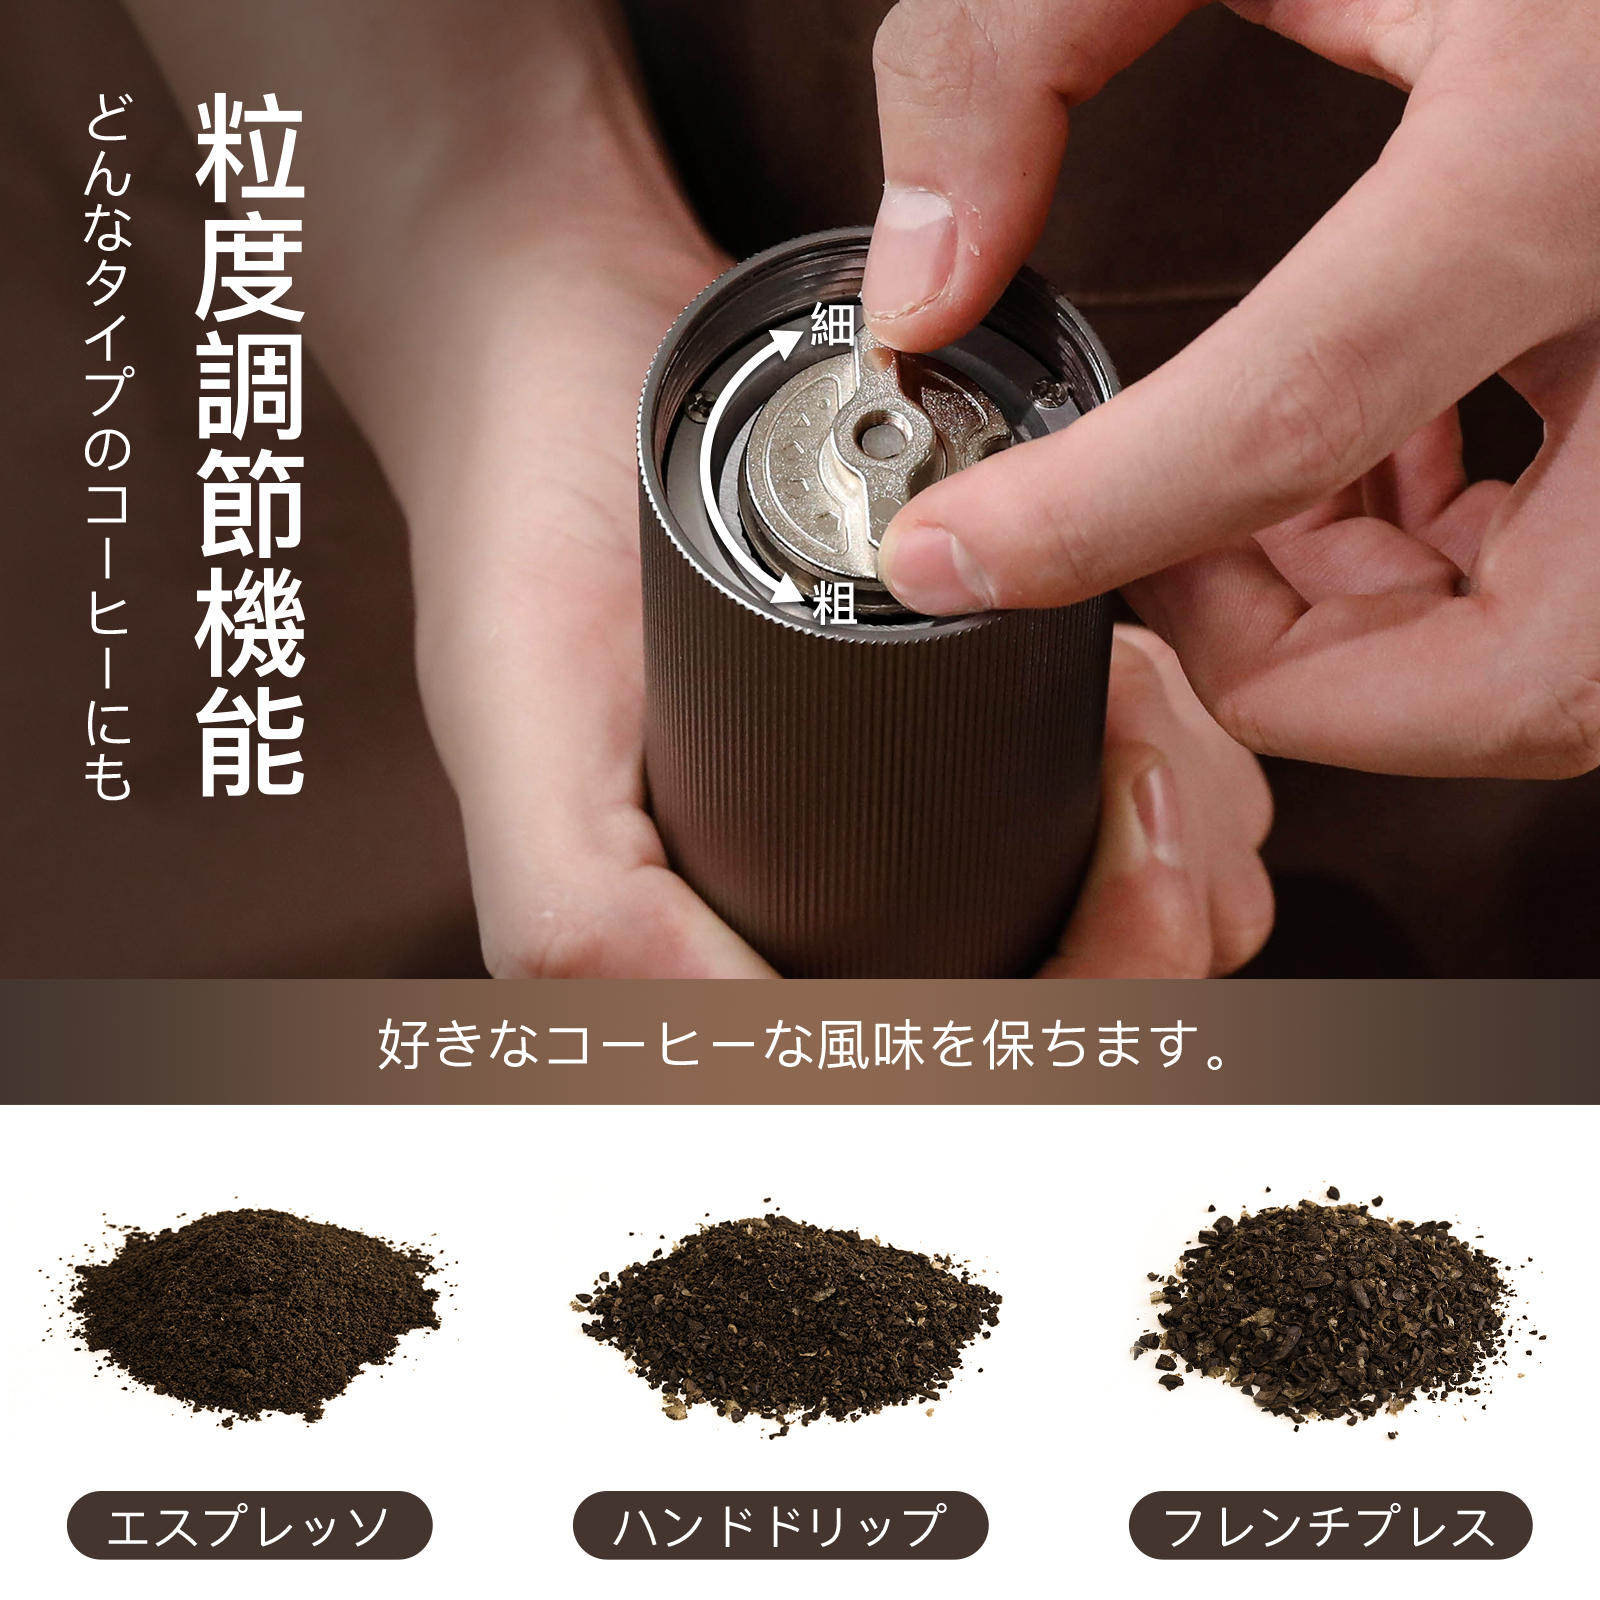 Konicooコーヒーミル 手動 ミル 手挽きコーヒーミル 段階粗さ調整可能 軽量 省力性 携帯 アウトドア 滑り止め付き 取り外し可能 お